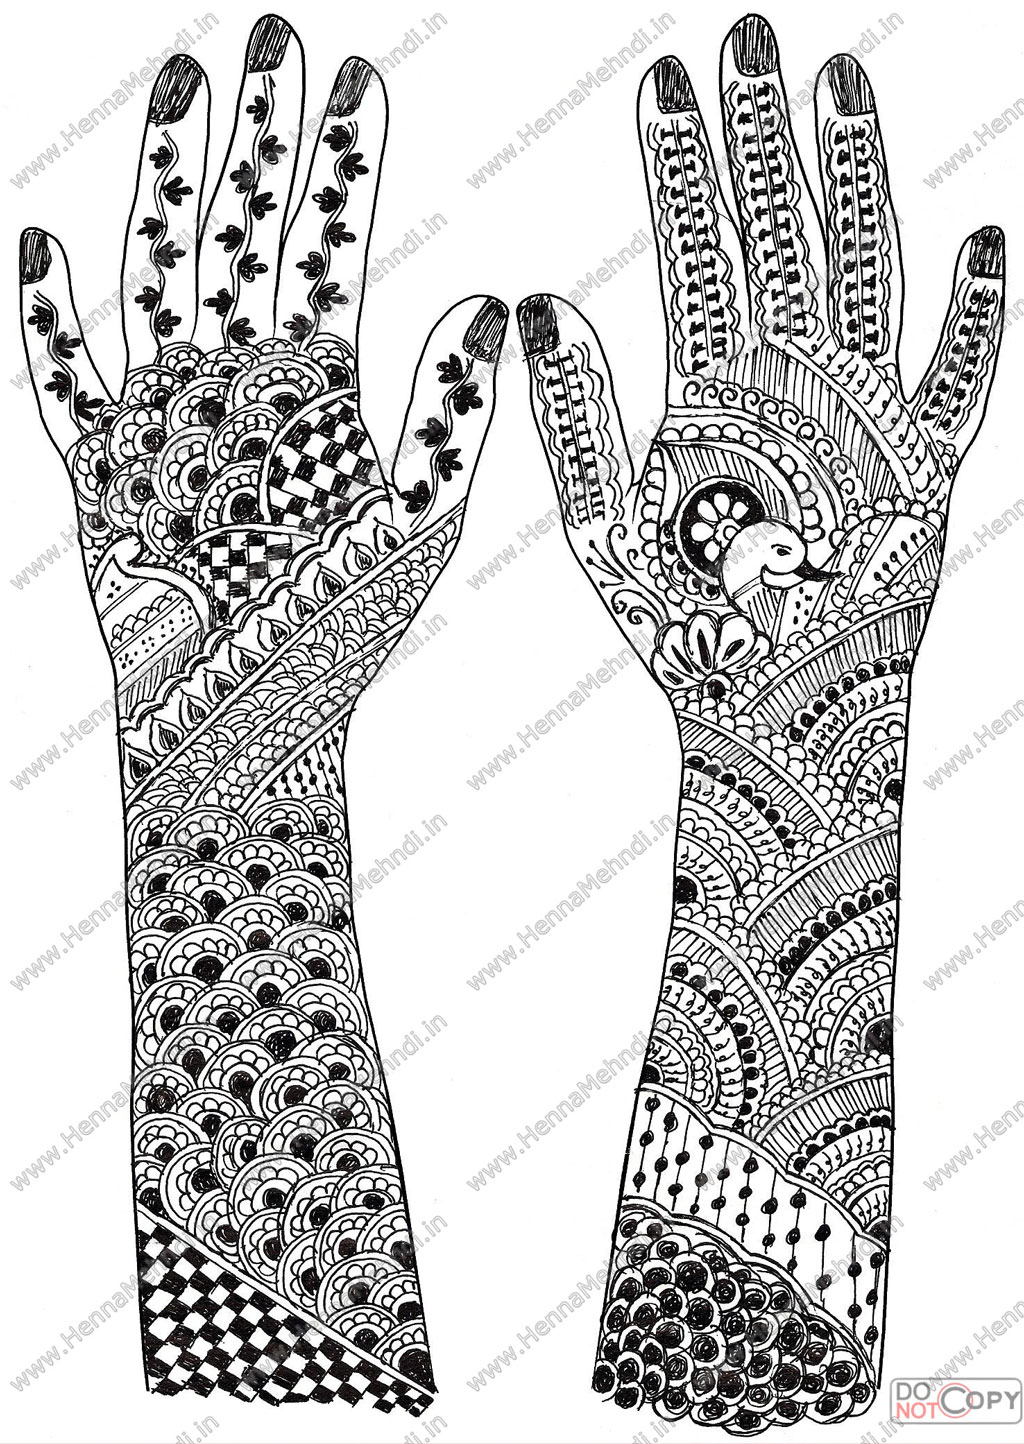 henna-mehndi-designs-6-by-hinasabreen-on-deviantart